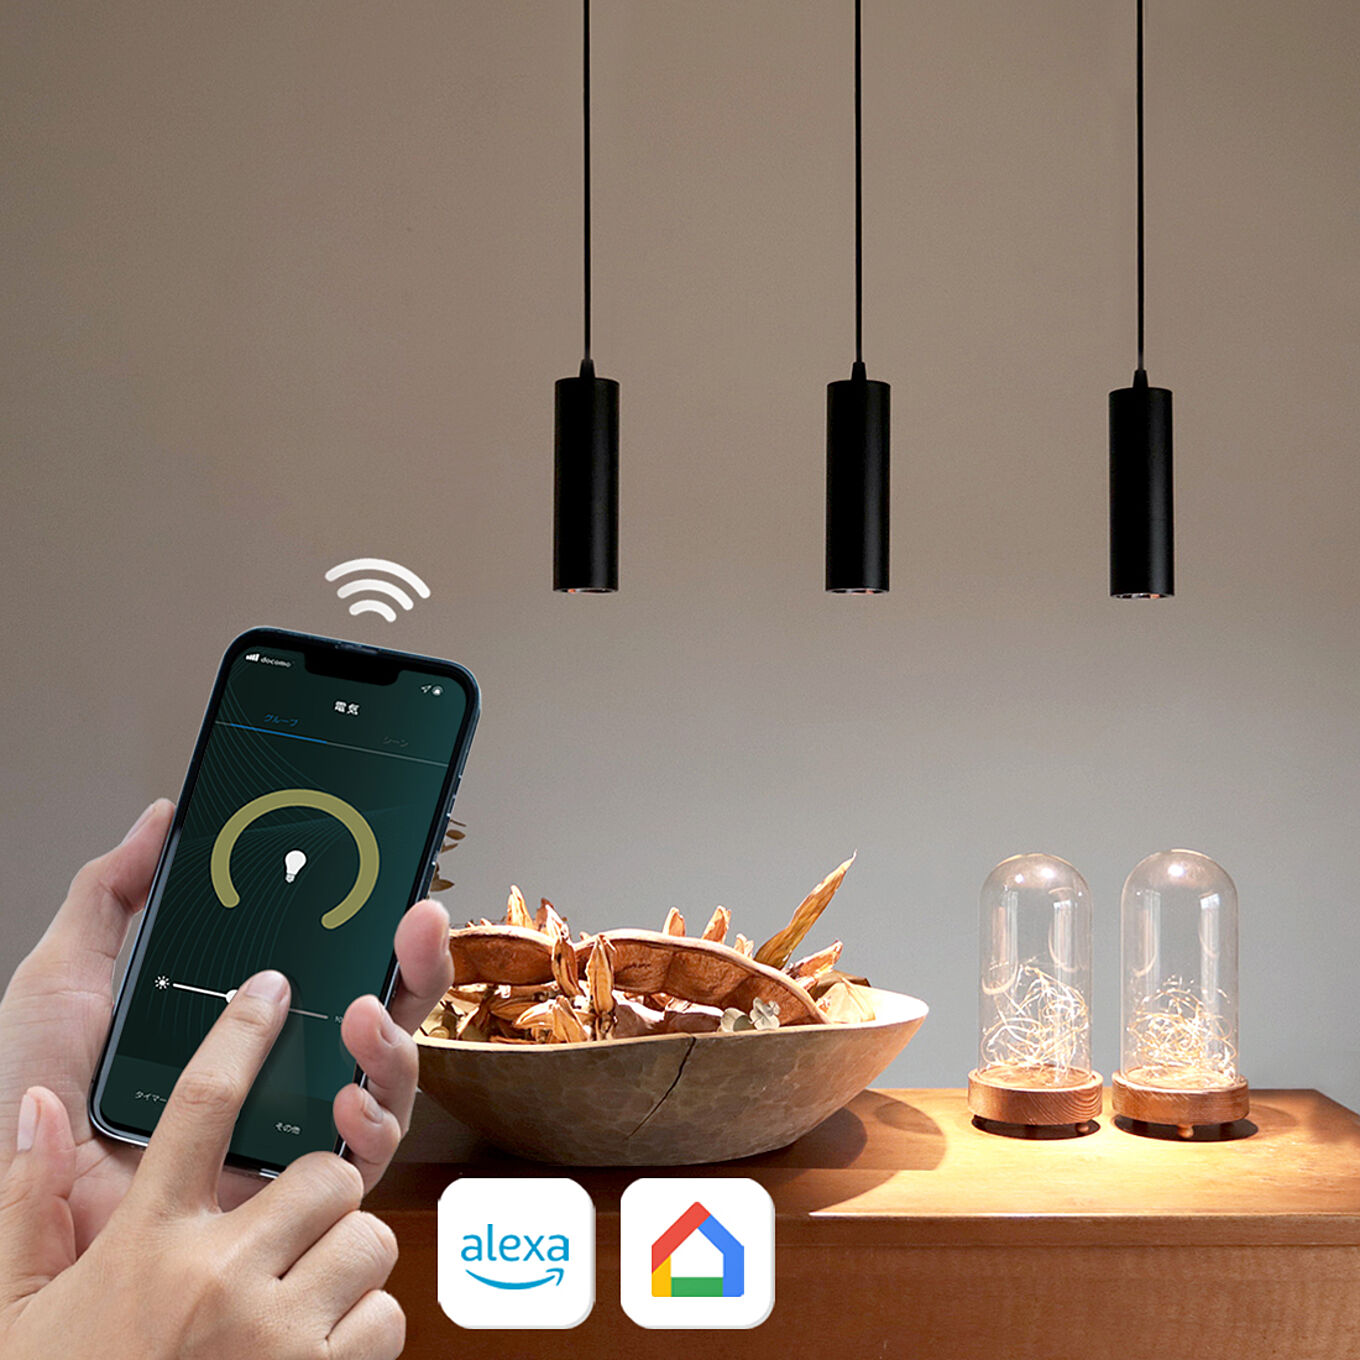 Alexa・Googleホーム対応アプリで遠隔操作や自動化も可能な「エジソンスマート ペンダントライト」モニター3名様大募集！